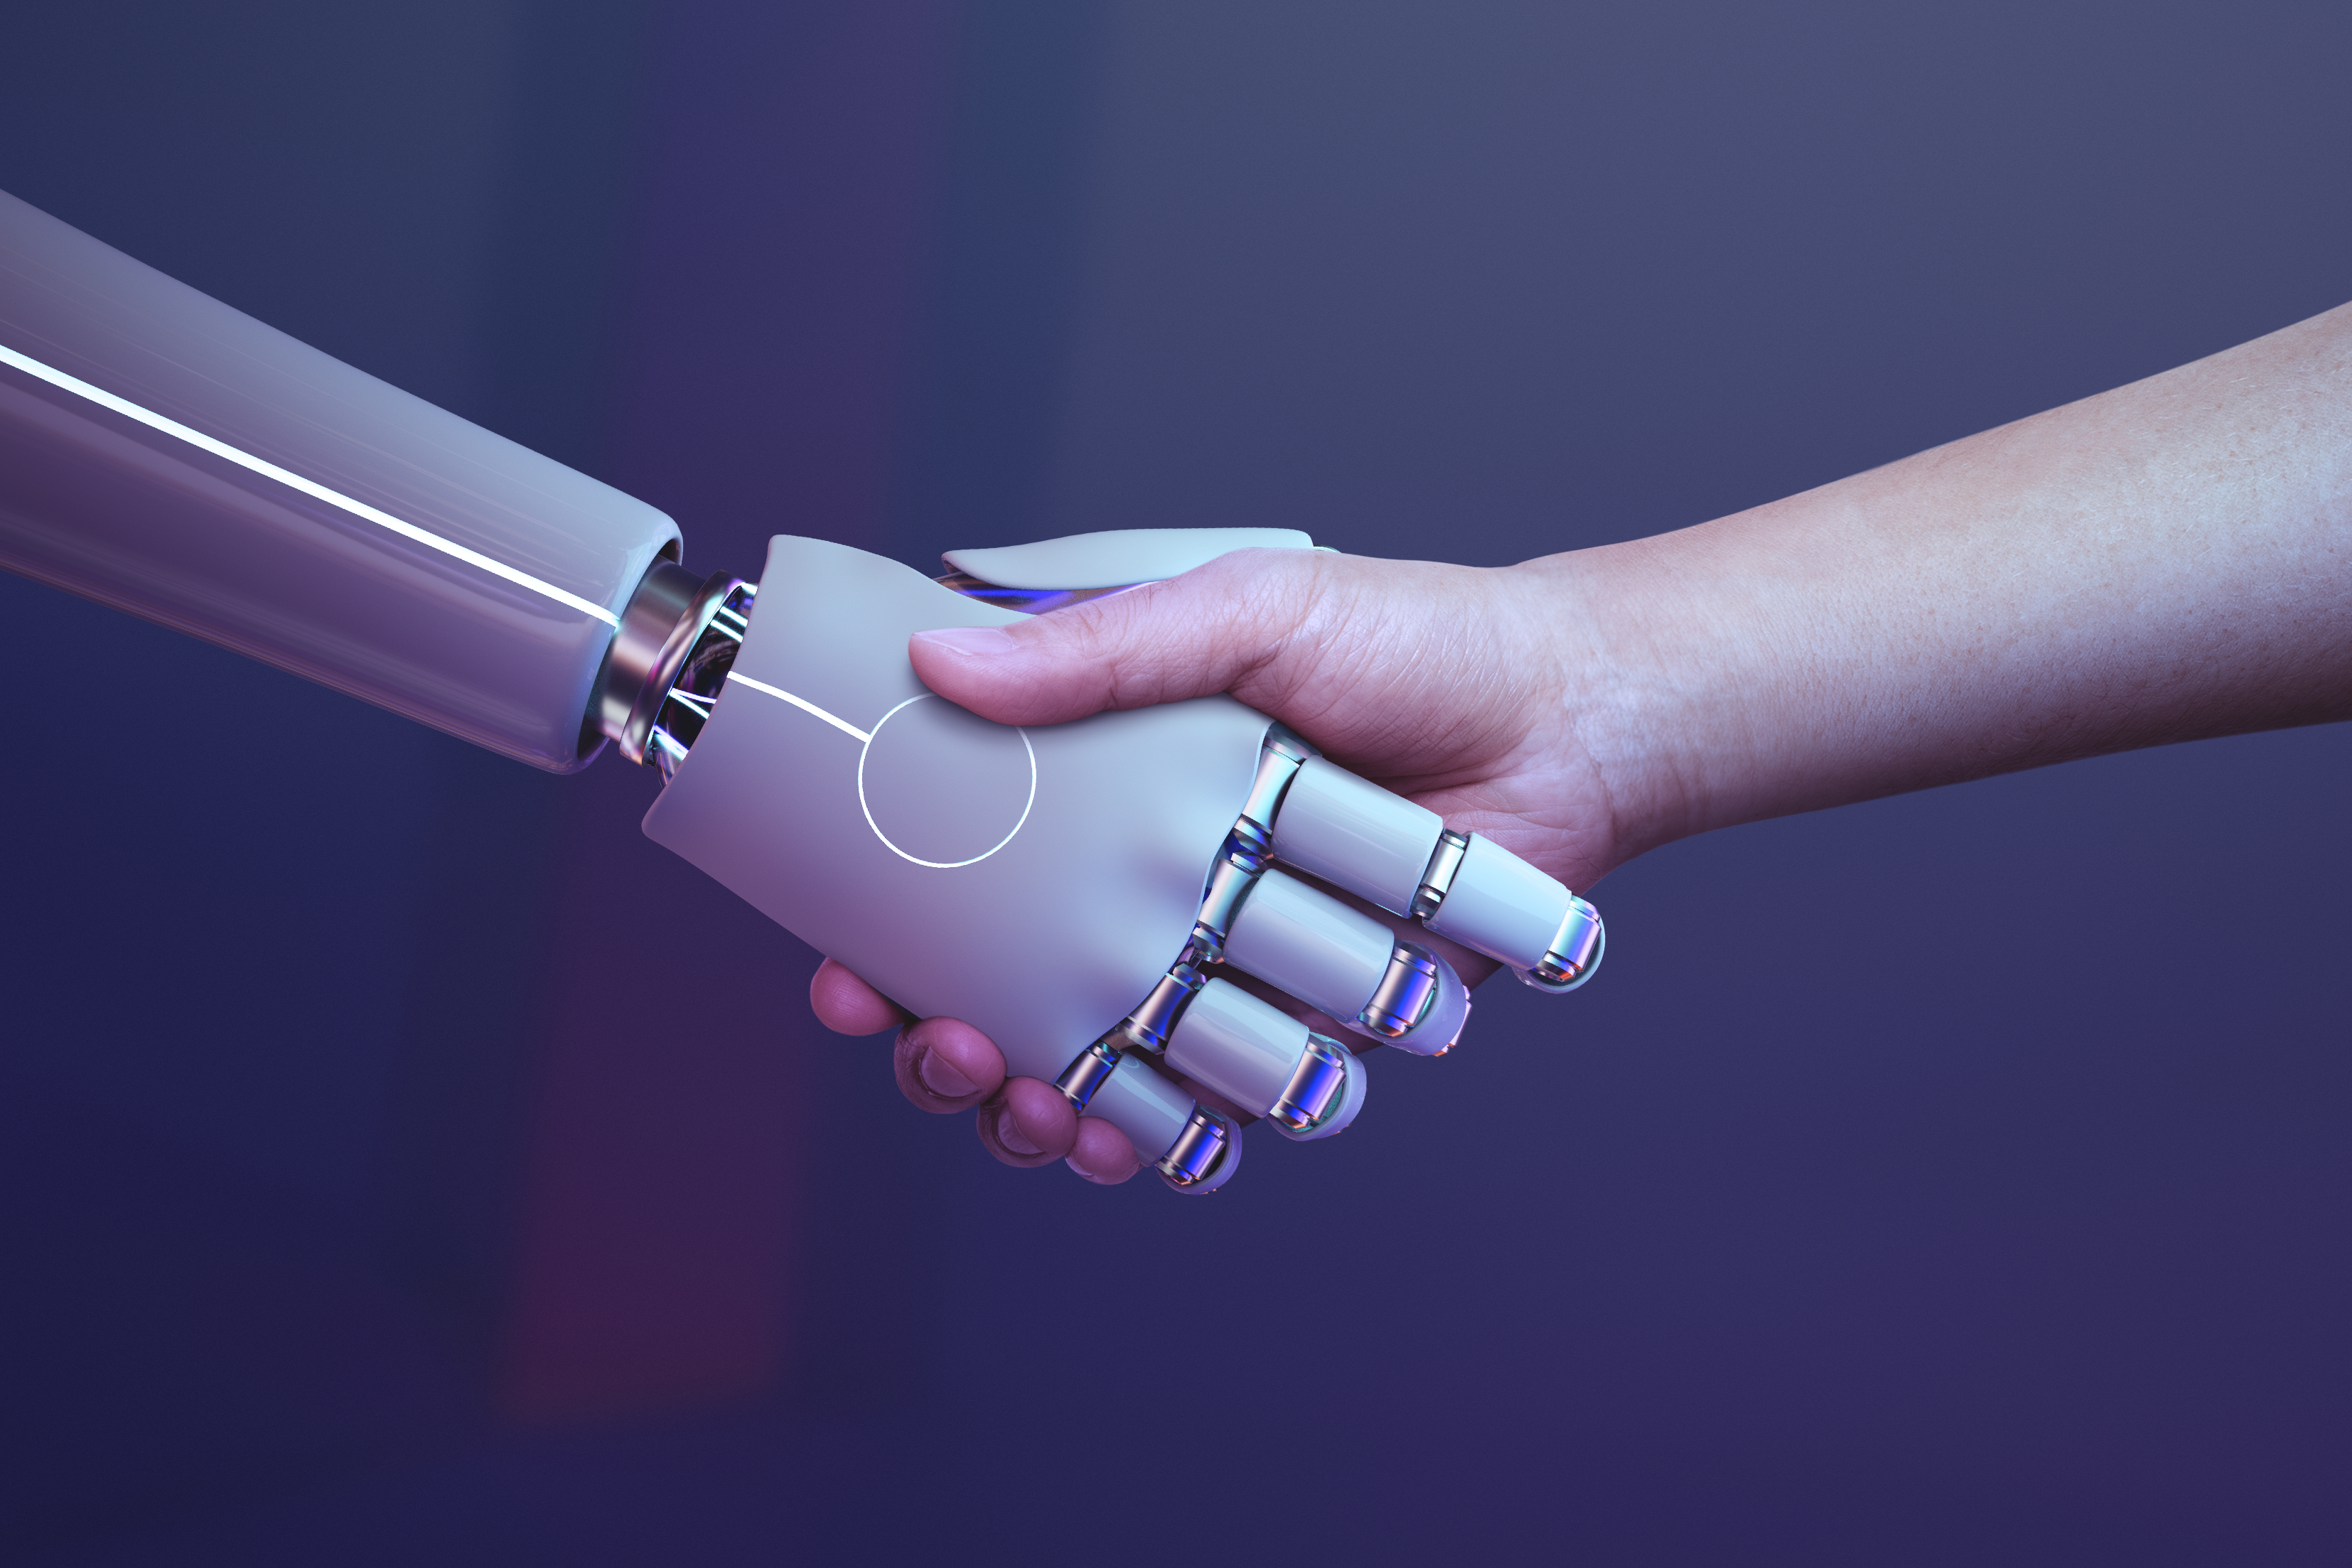 robot-handshake-human-background-futuristic-digital-age.jpg (5.03 MB)